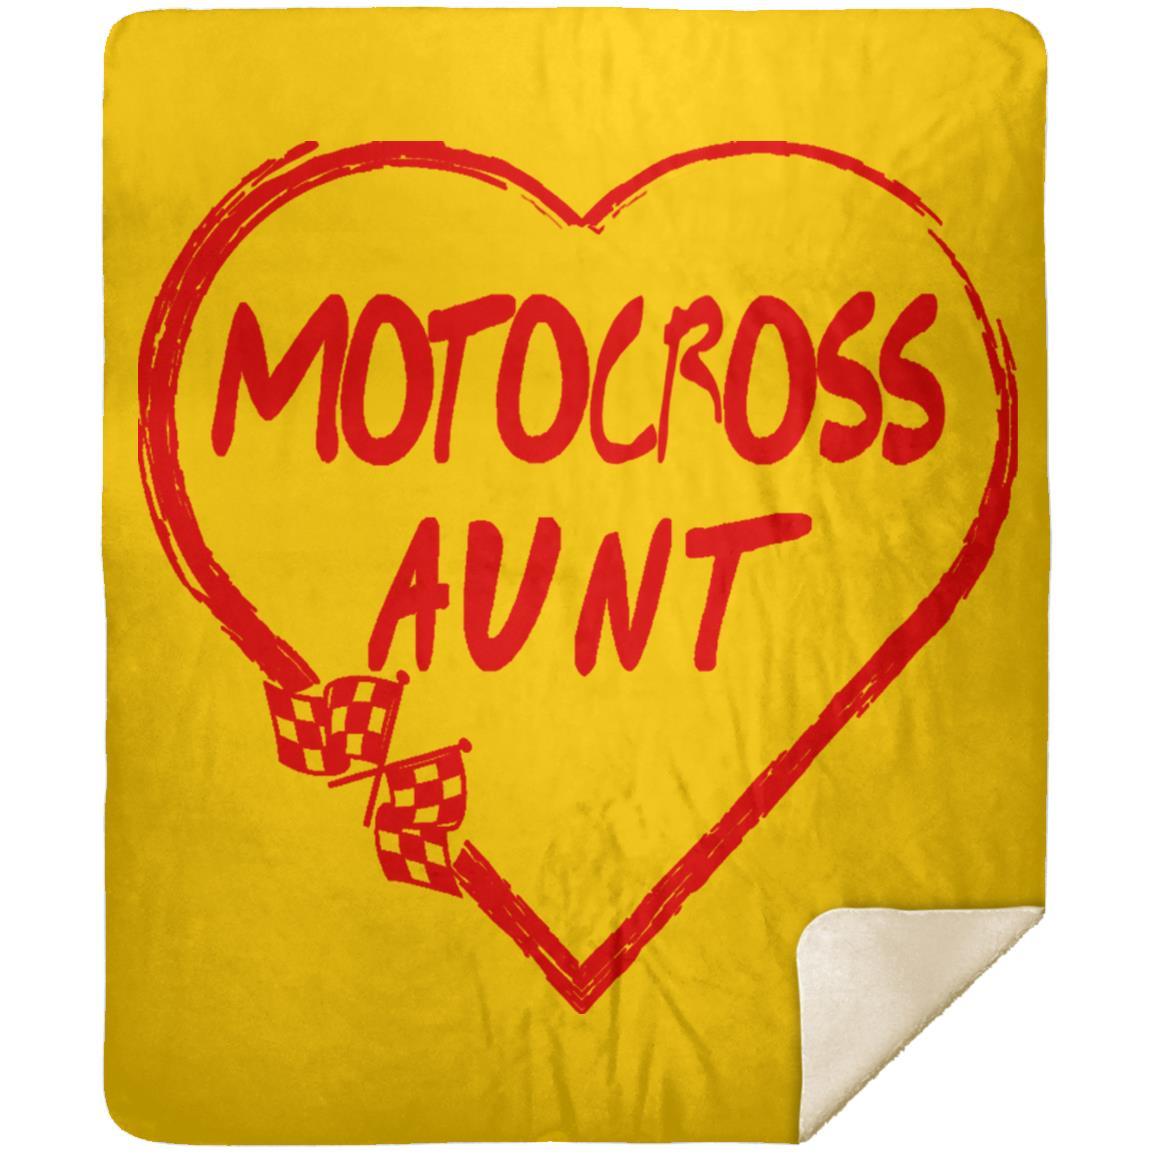 Motocross Aunt Heart Premium Mink Sherpa Blanket 50x60